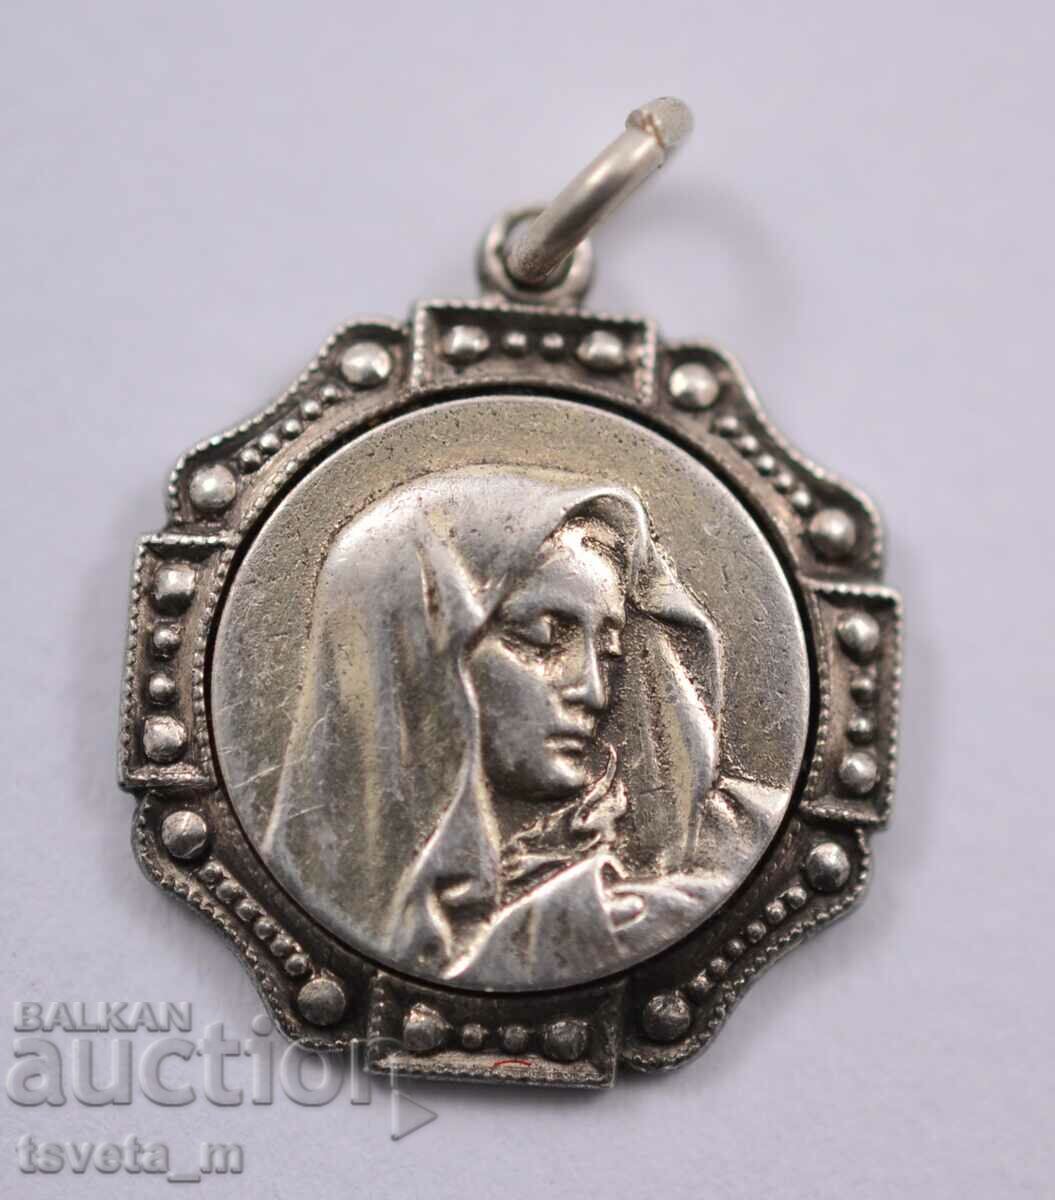 Virgin Mary silver medallion / pendant